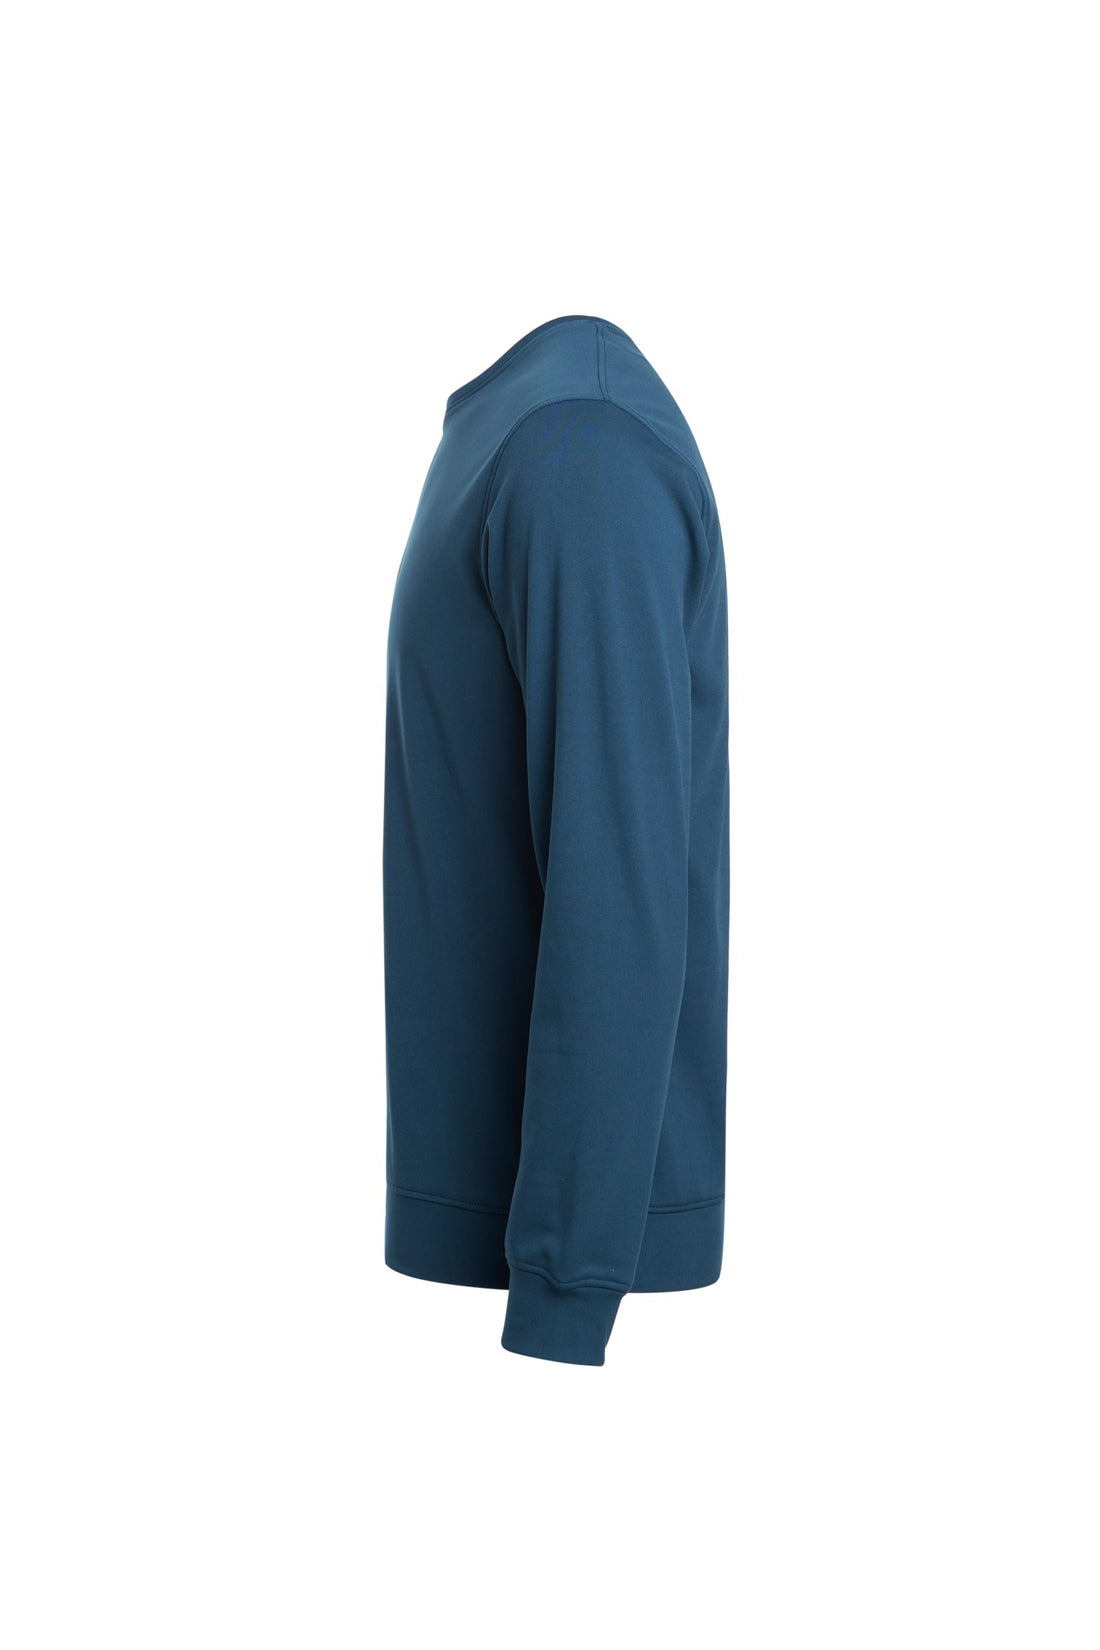 Airforce blue fleece full sleeve sweatshirt